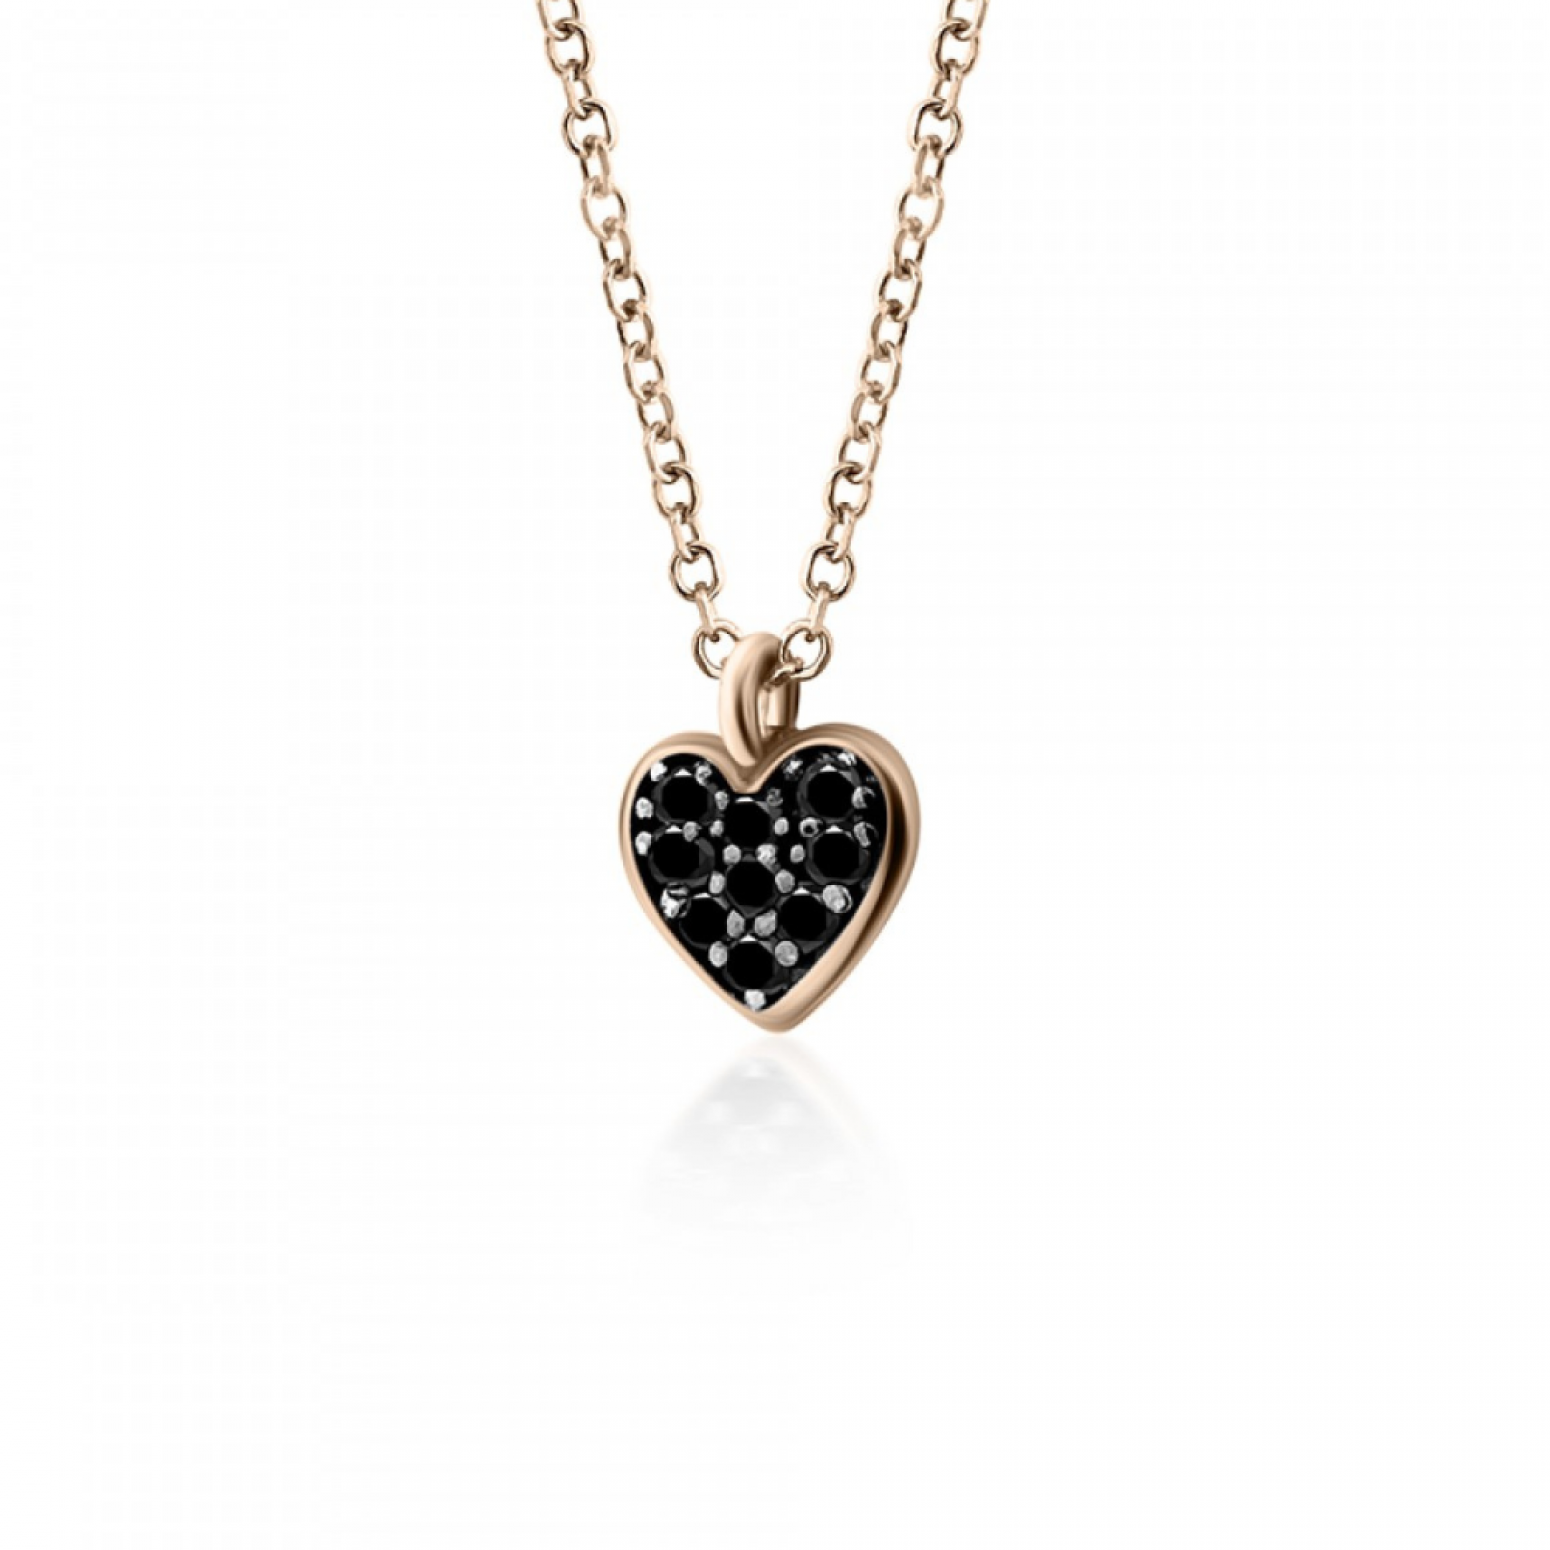 Heart necklace, Κ14 pink gold with black zircon, ko5497 NECKLACES Κοσμηματα - chrilia.gr